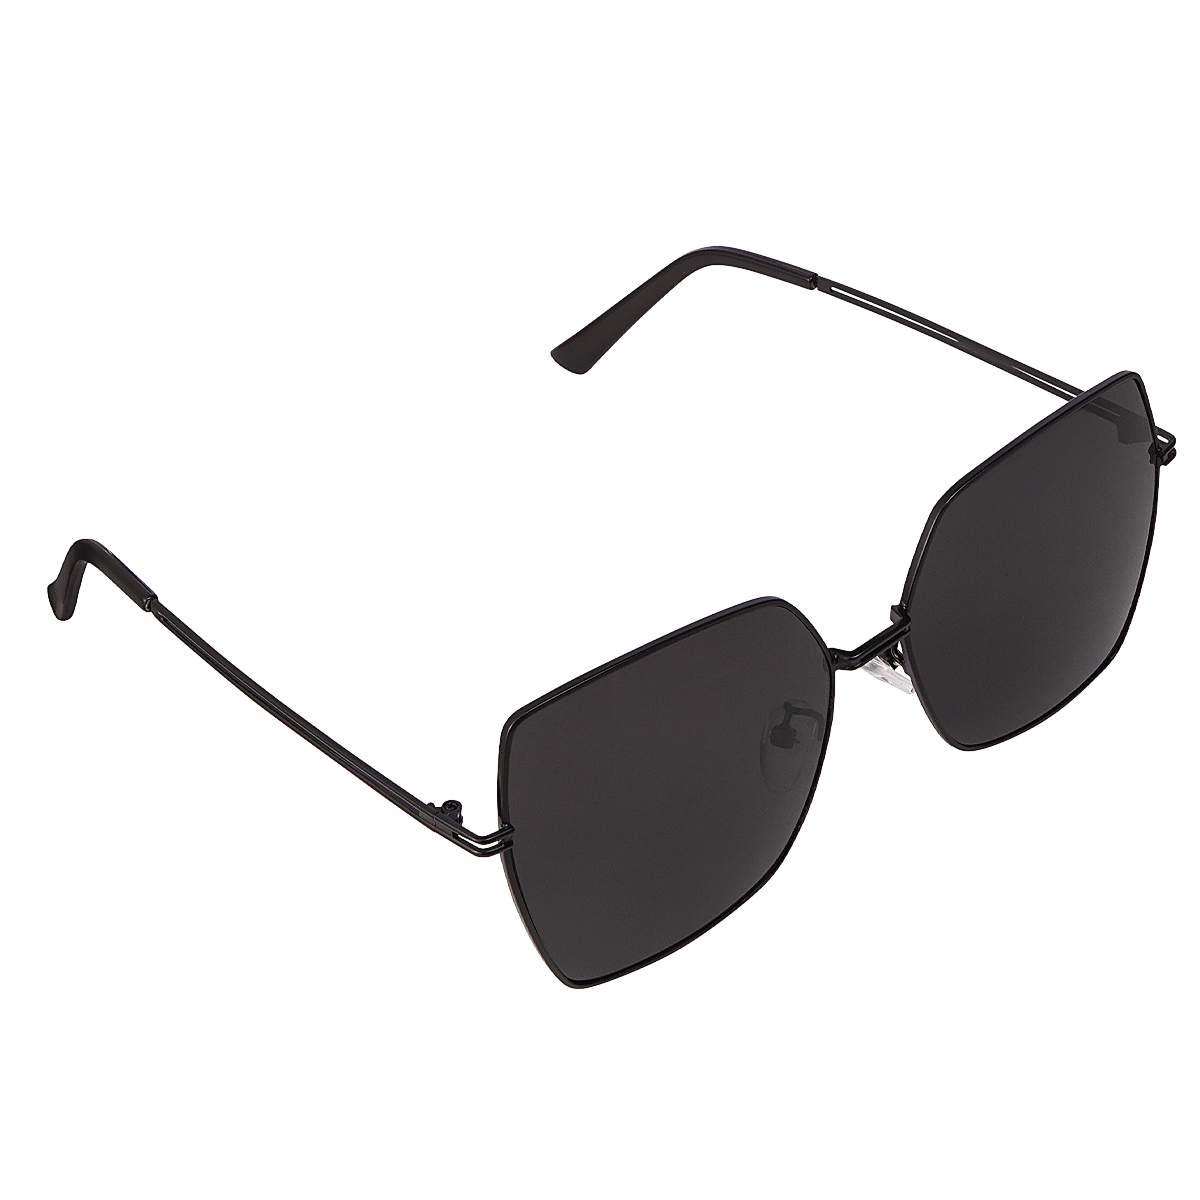 Thin sunglasses